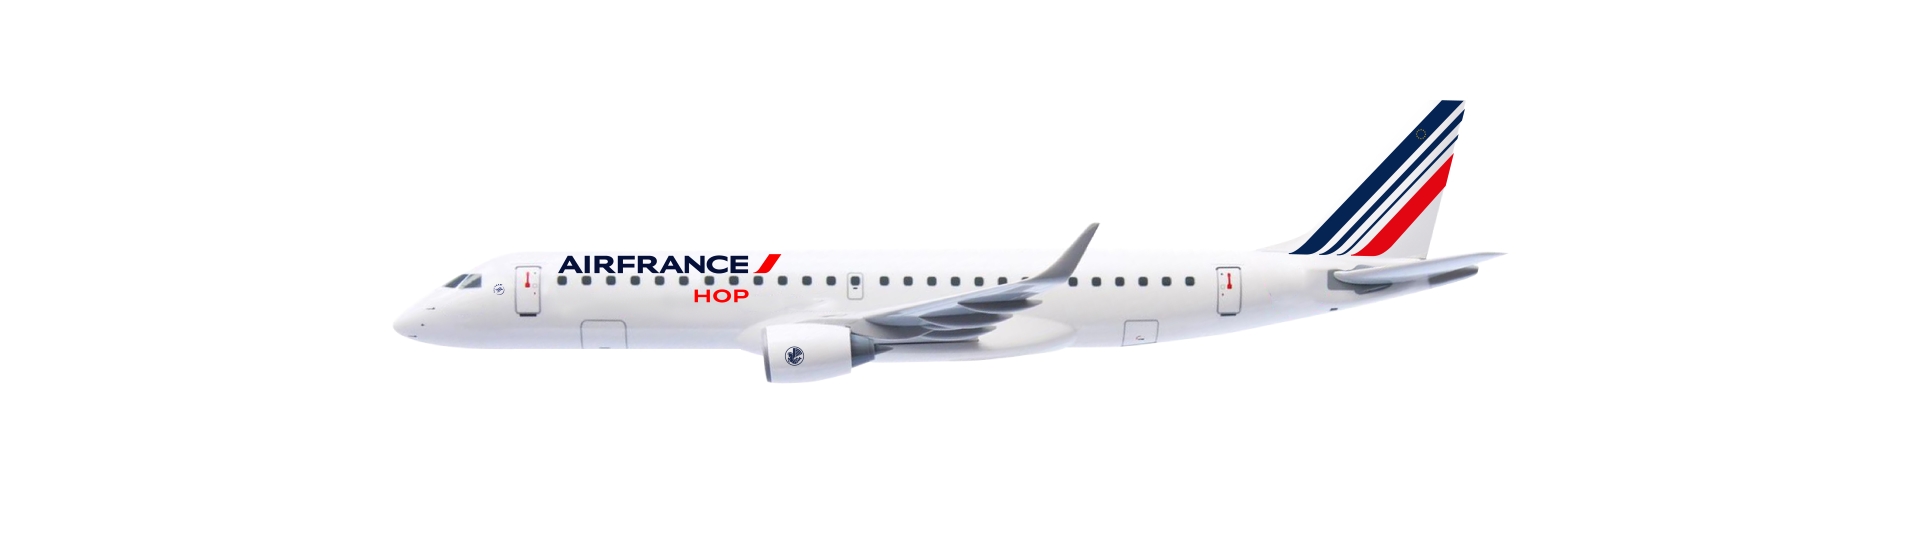 Air France-KLM Group